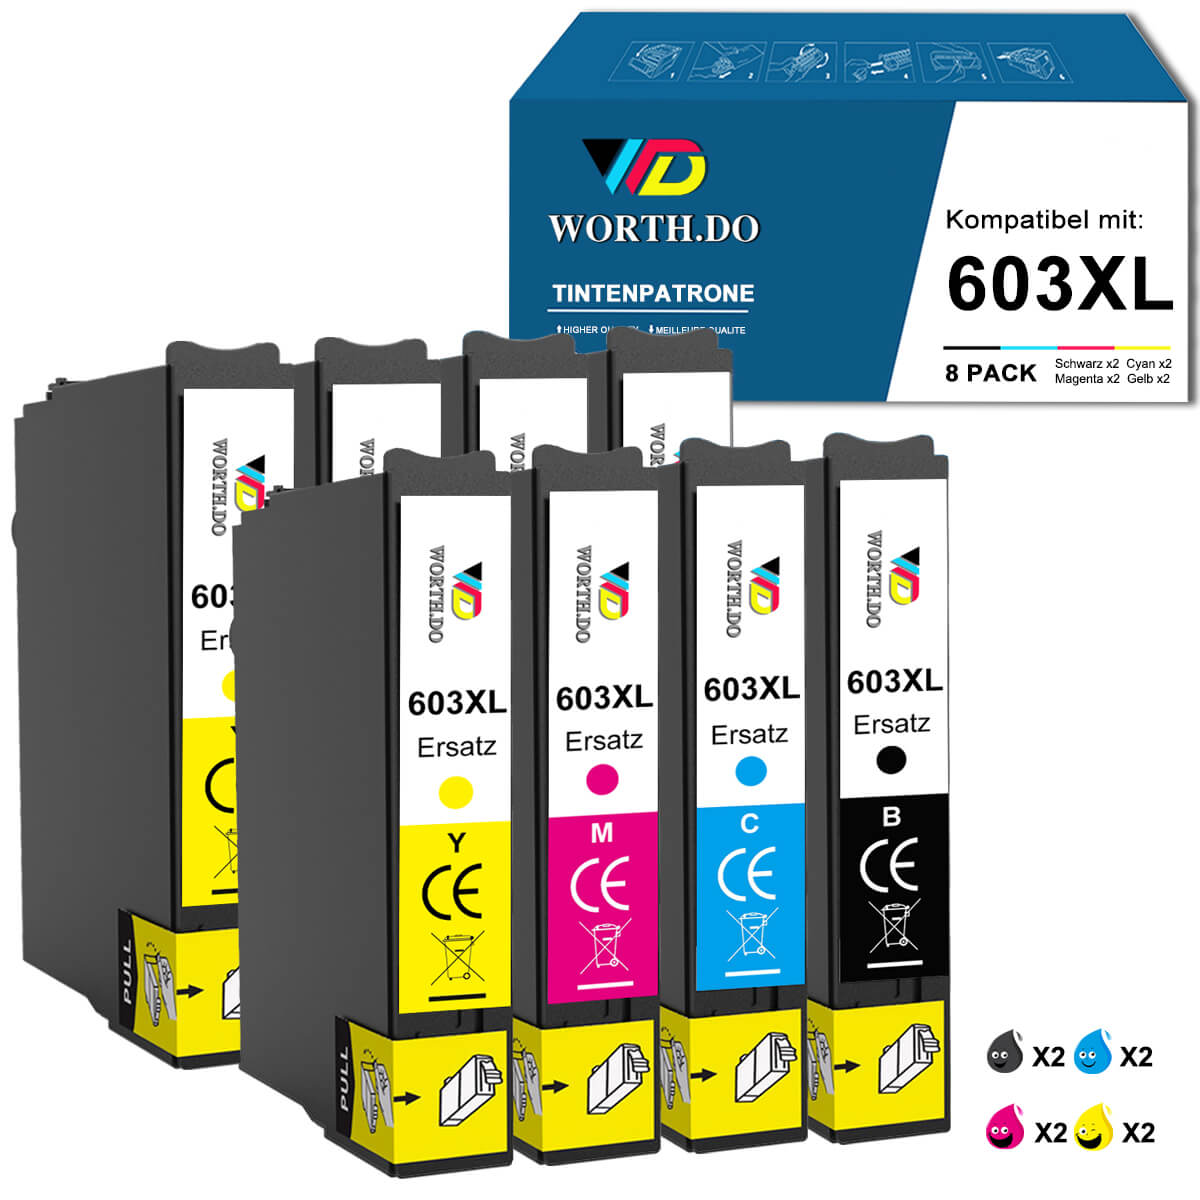       worthdo-kompatible-tintenpatronen-feur-epson-603xl-8pack